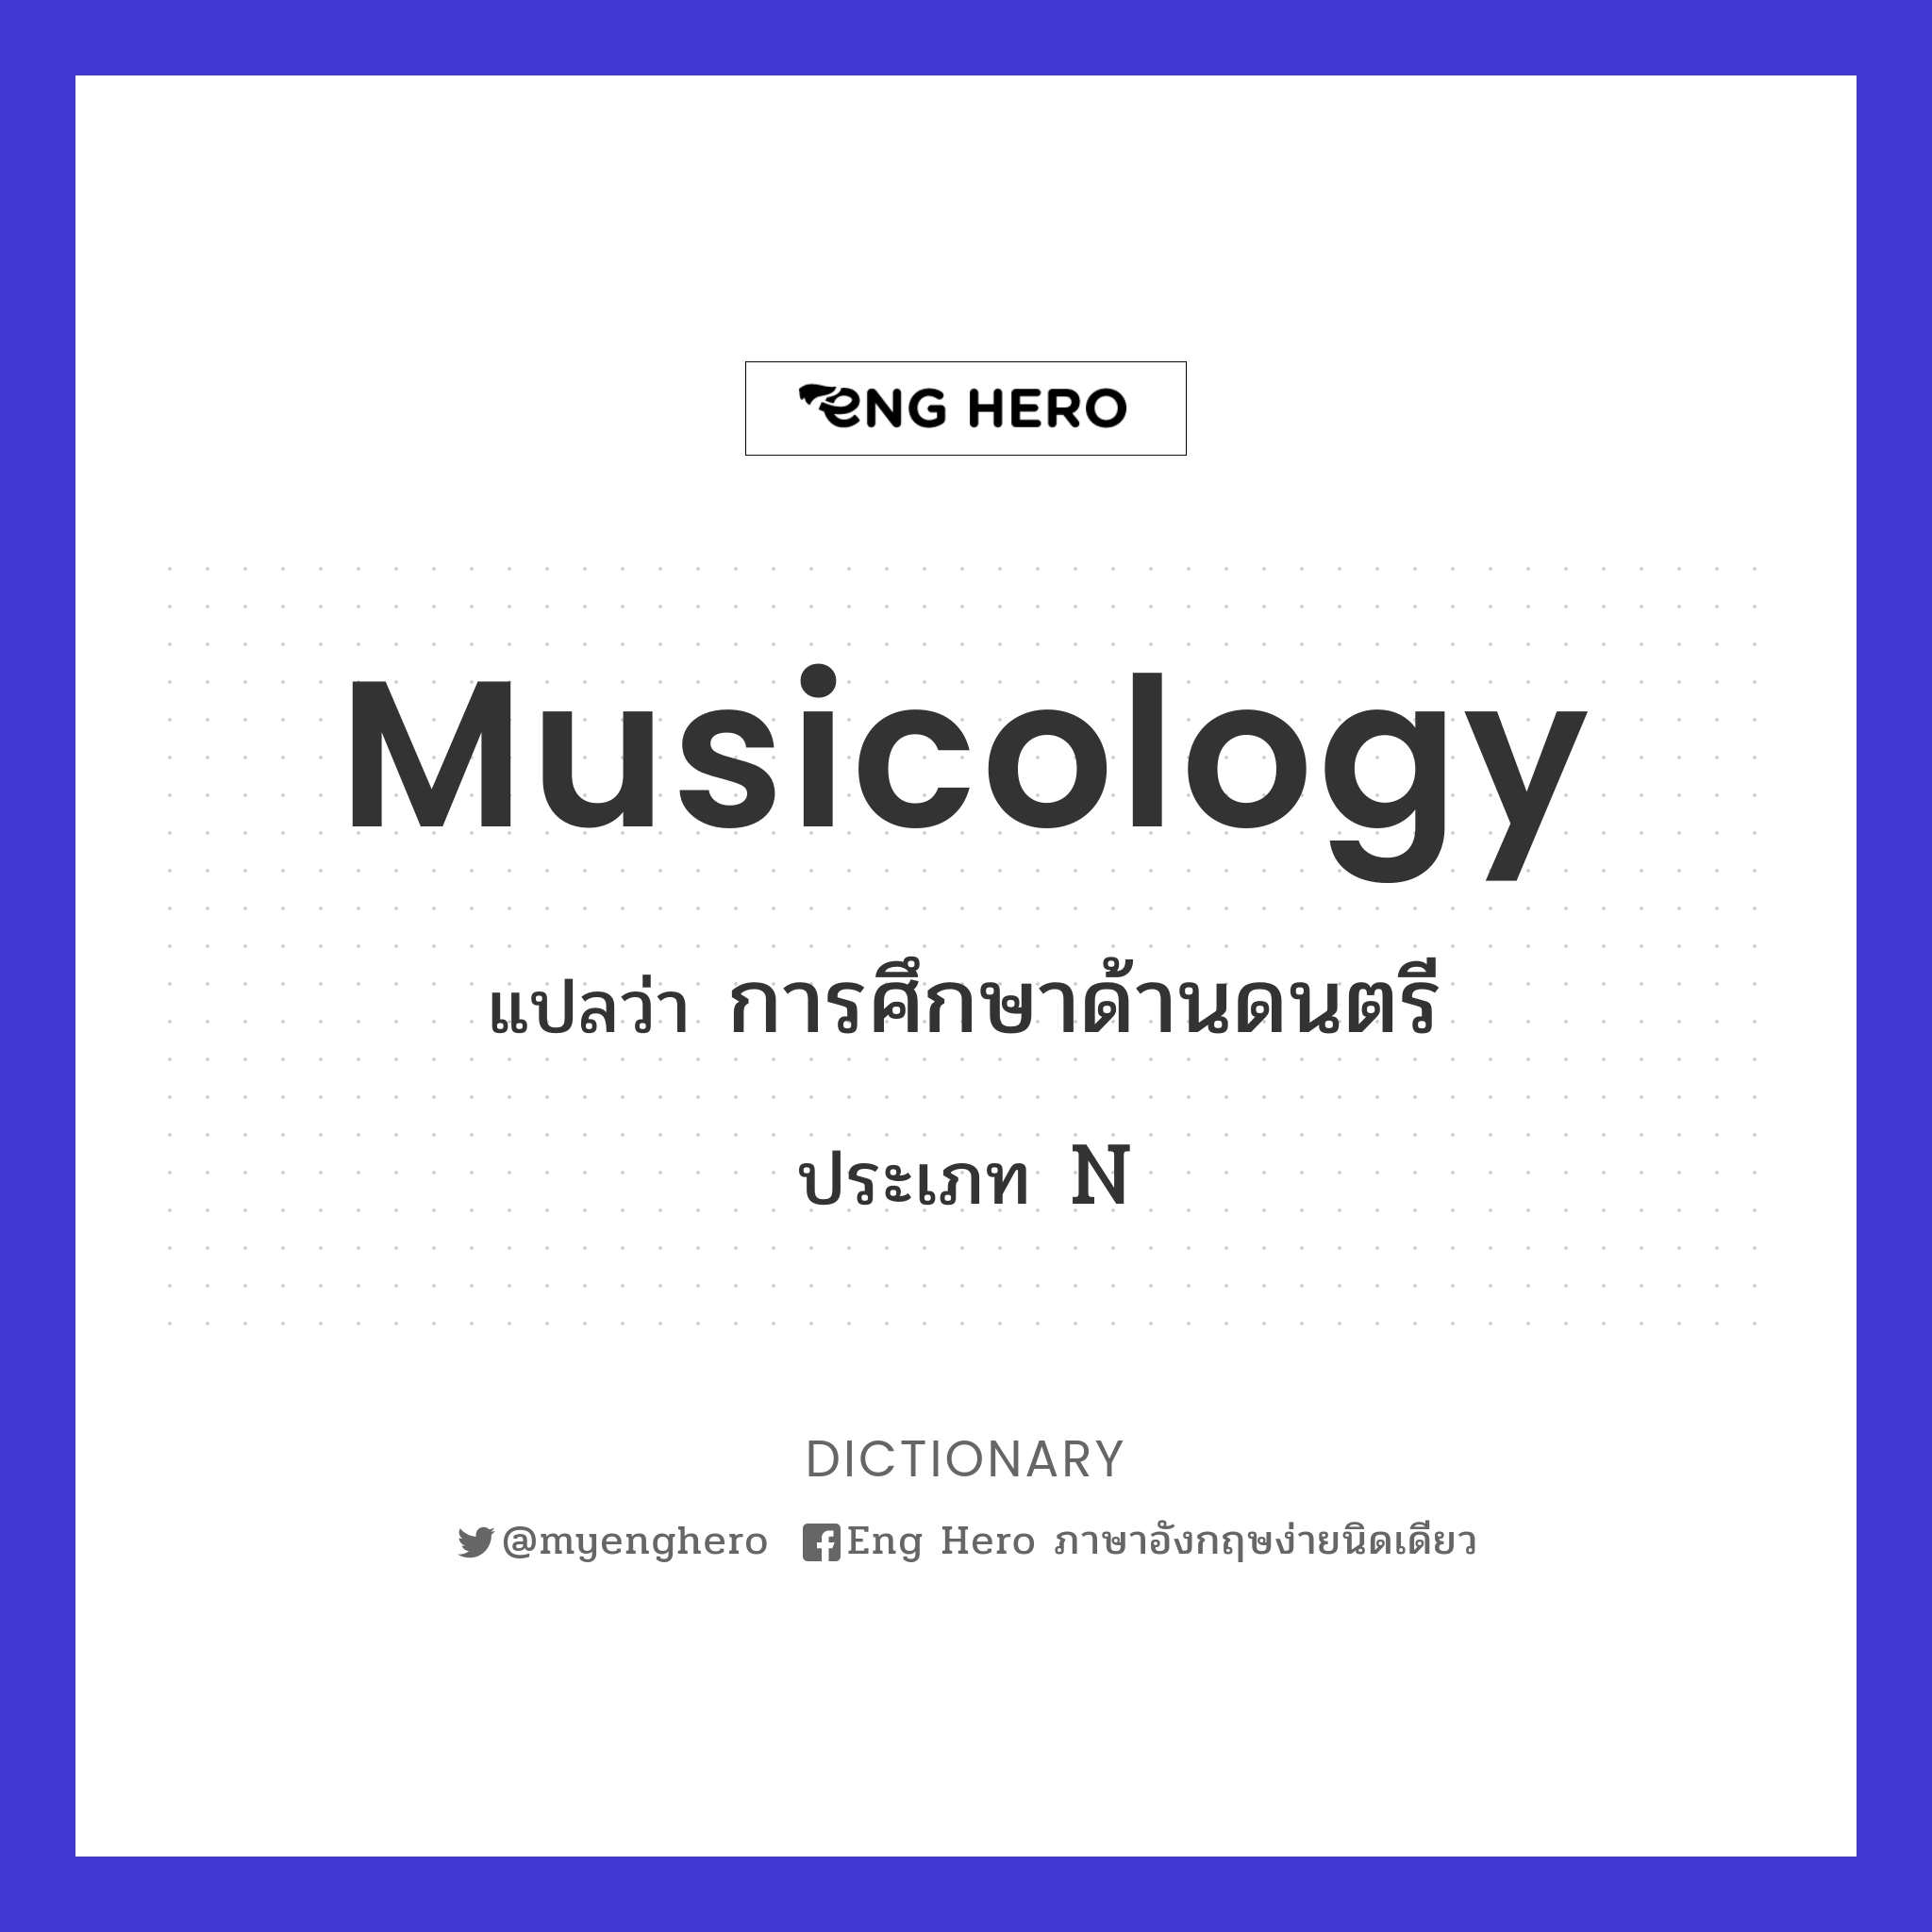 musicology